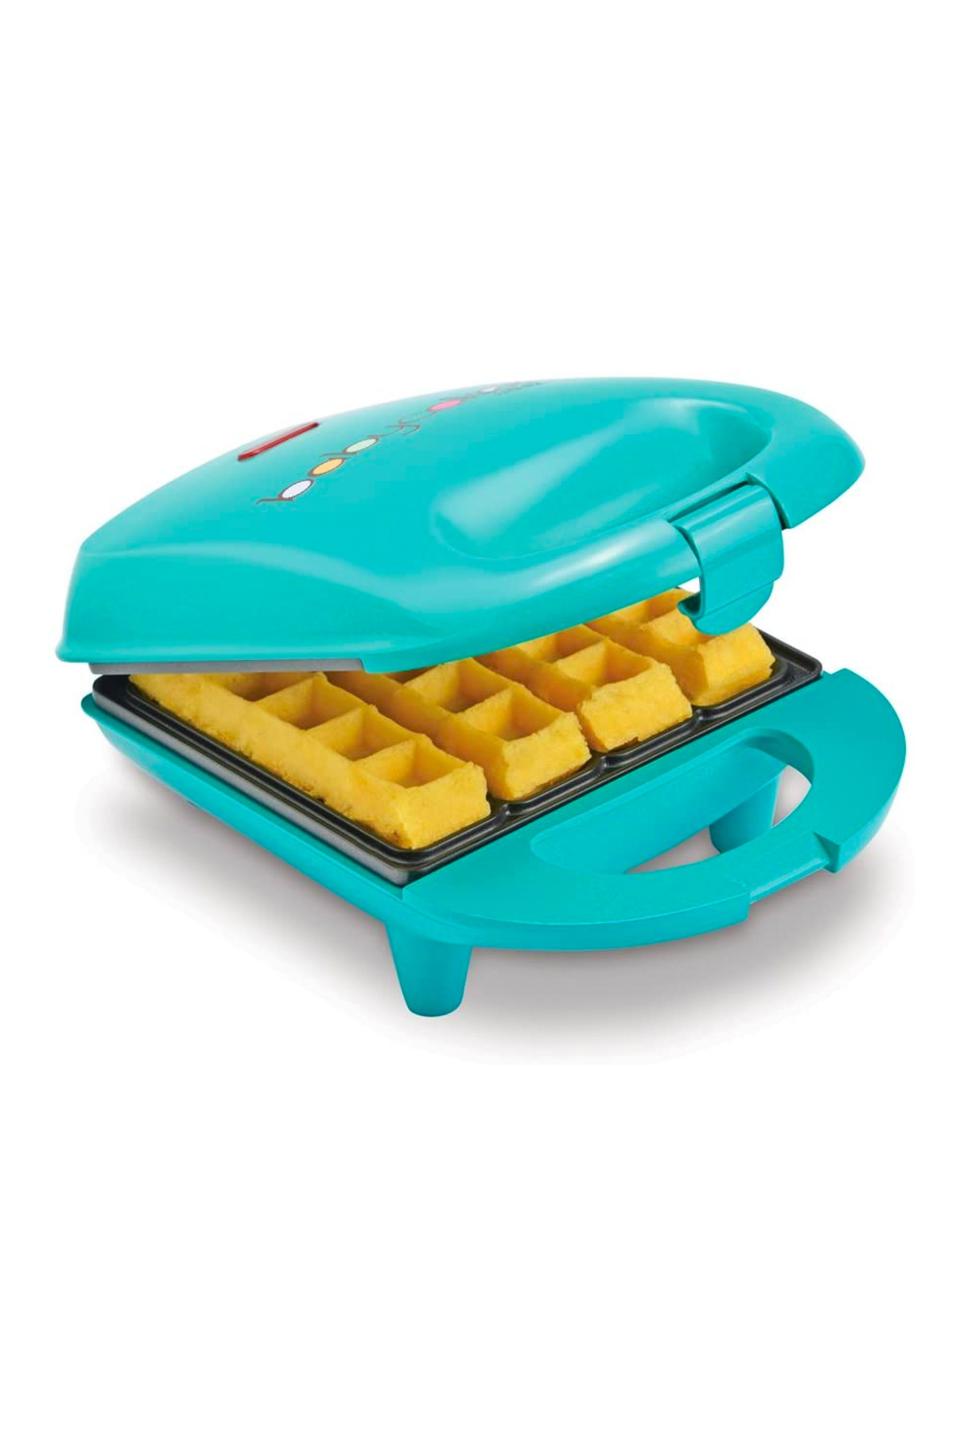 7) Babycakes Mini Waffle Stick Maker